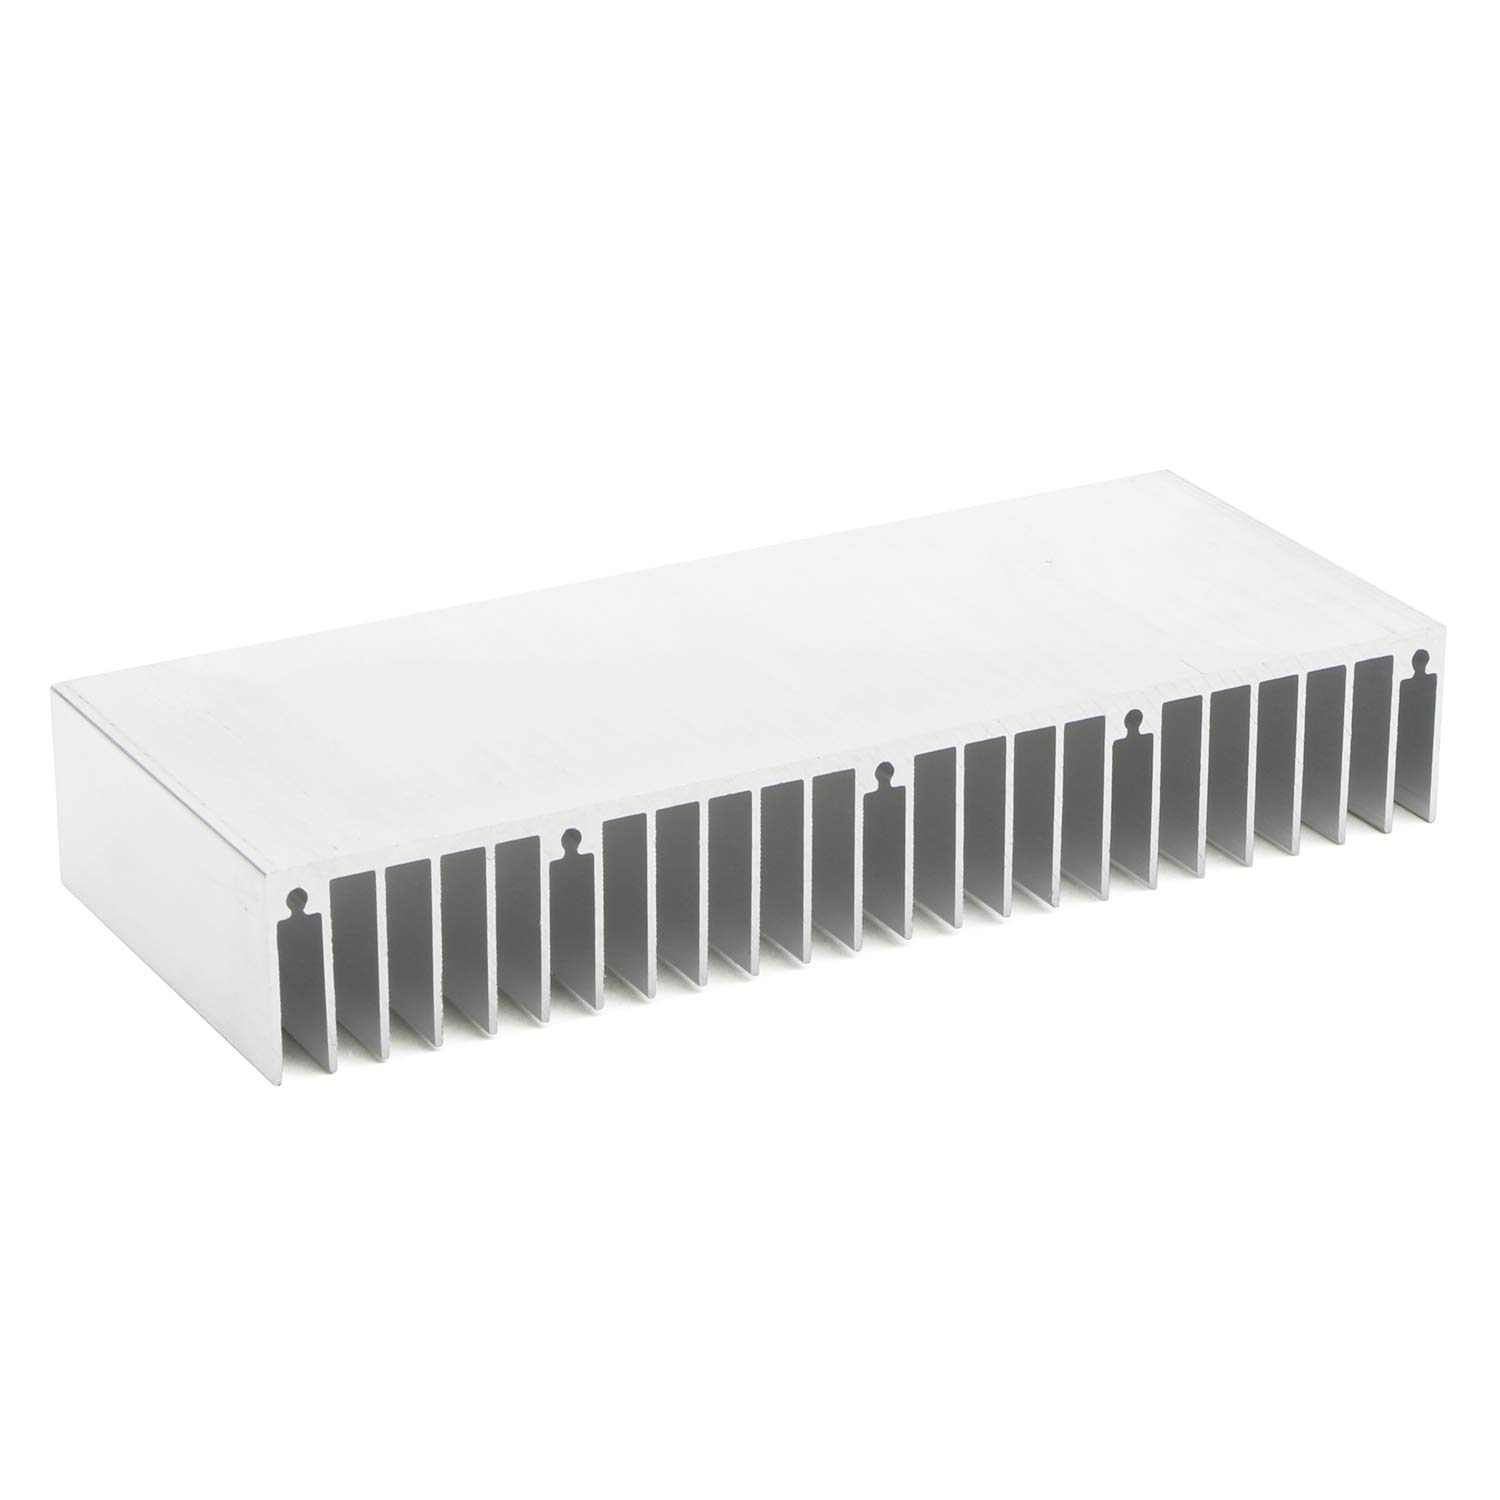 JIUWU Aluminum Heat Sink Heatsink Module Cooler Fin Heat Radiator Board Cooling for Amplifier Transistor Semiconductor Devices Silver Tone 150mm (L) x 60mm (W) x 25mm (H) 2pcs Set